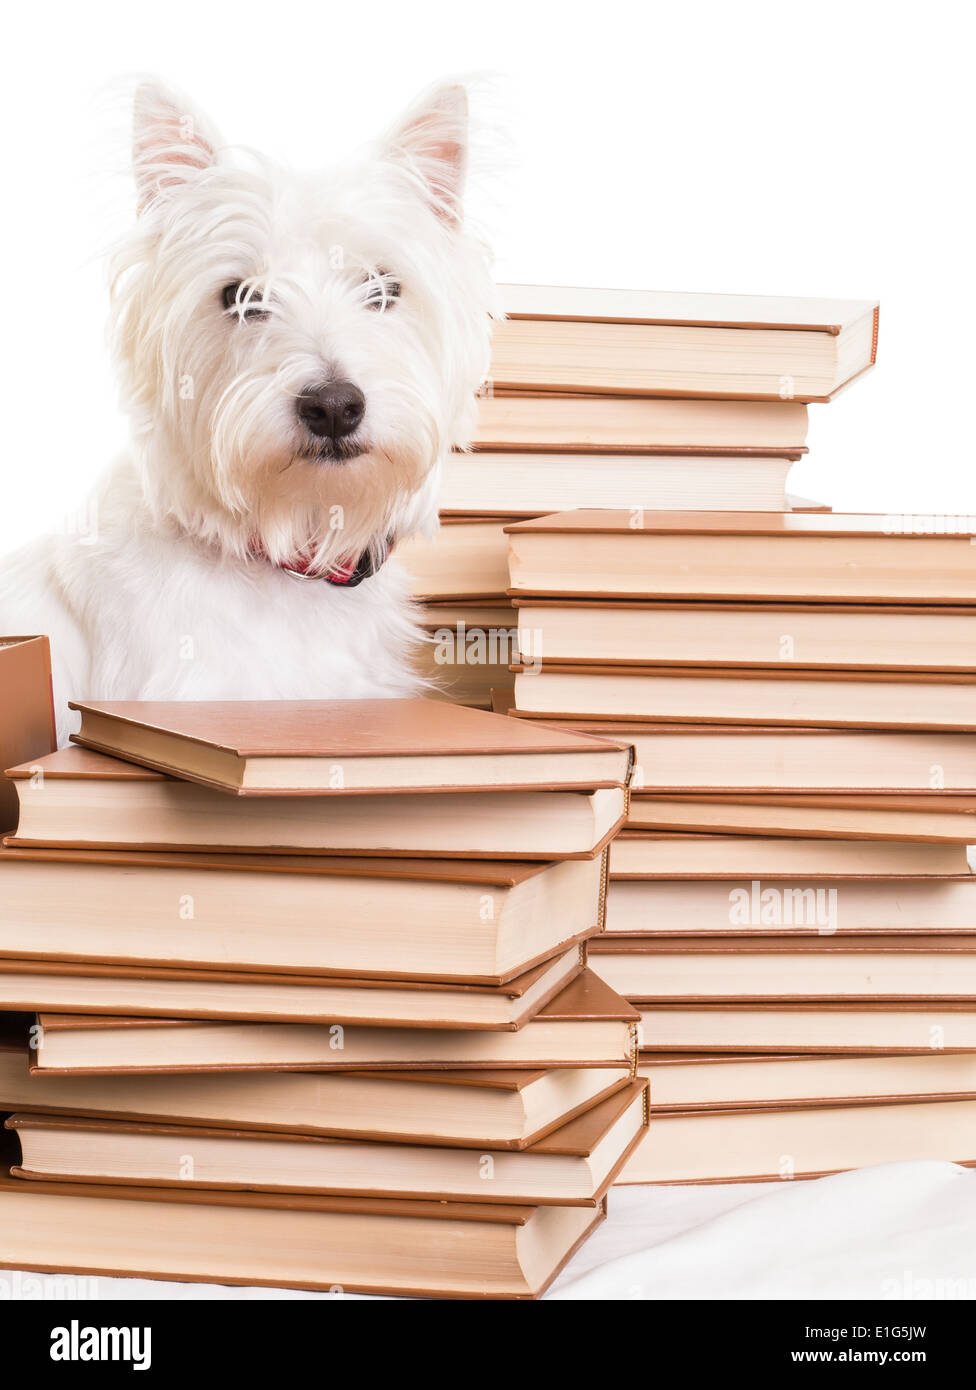 https://c8.alamy.com/comp/E1G5JW/a-cute-small-white-dog-surrounded-by-a-pile-of-books-E1G5JW.jpg